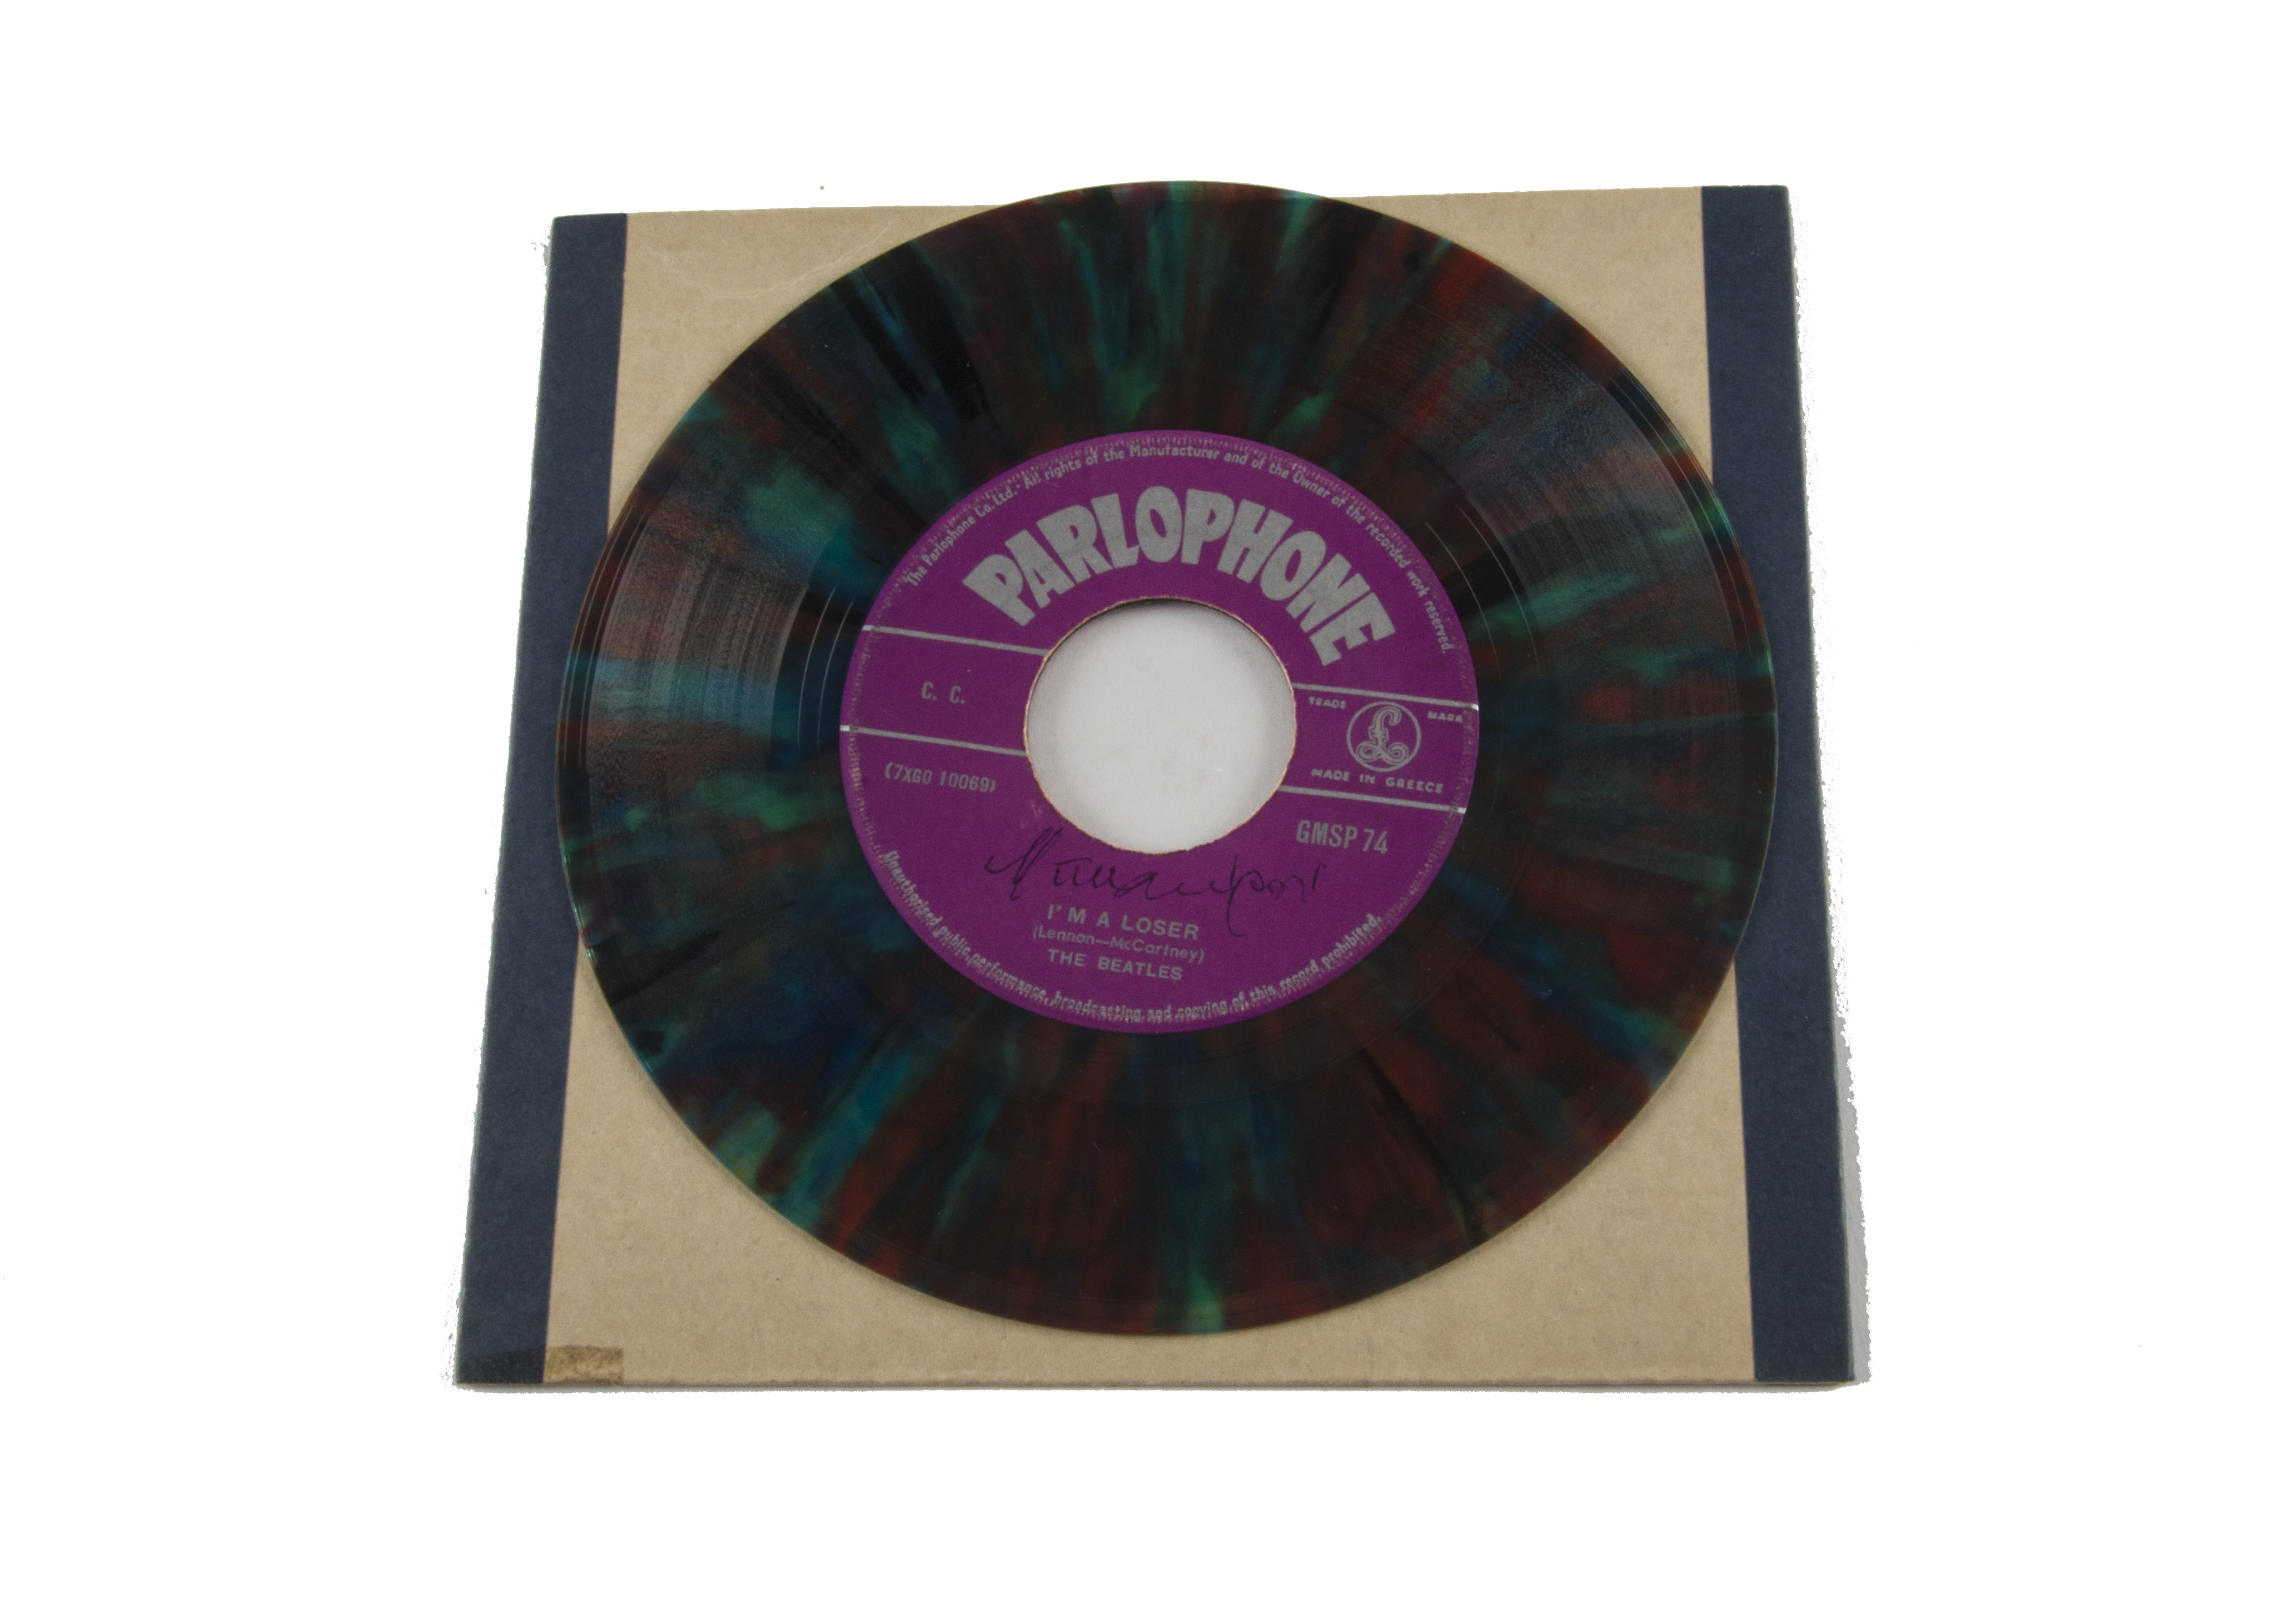 The Beatles, I'm A Loser 7" Single b/w Roll Music - Greek release on multicoloured vinyl on